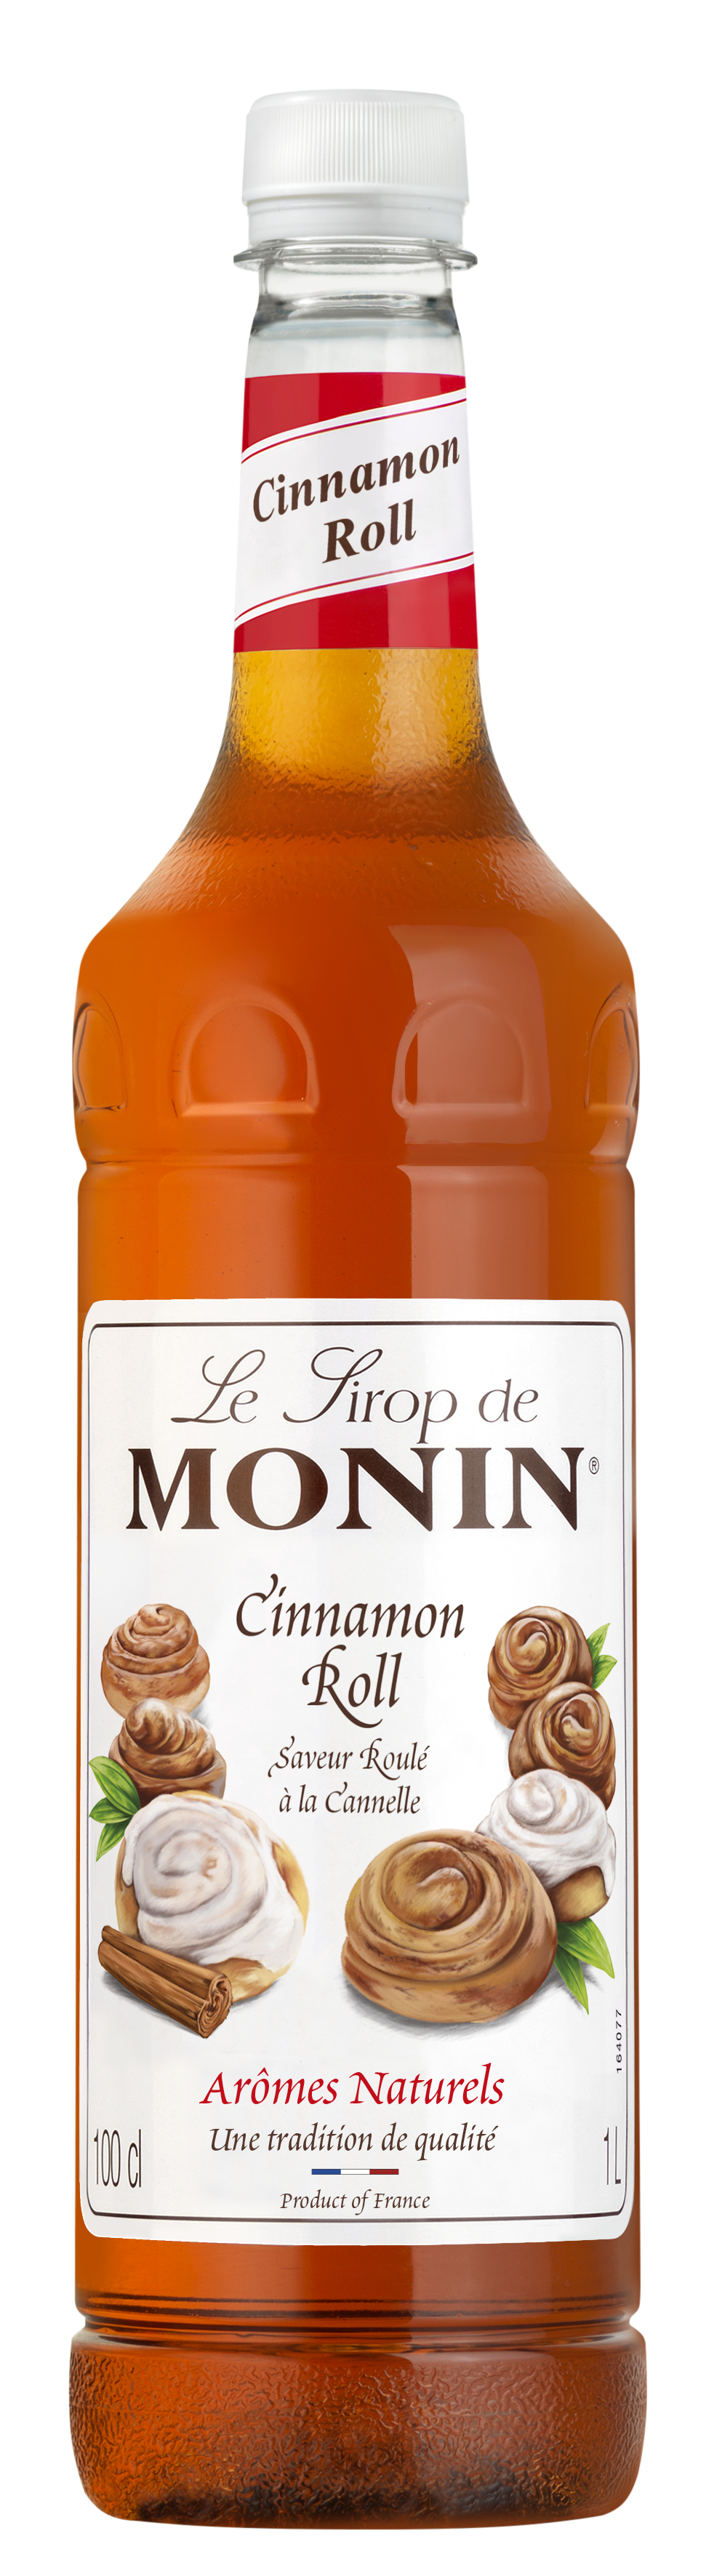 MONIN Cinnamon Roll Syrup